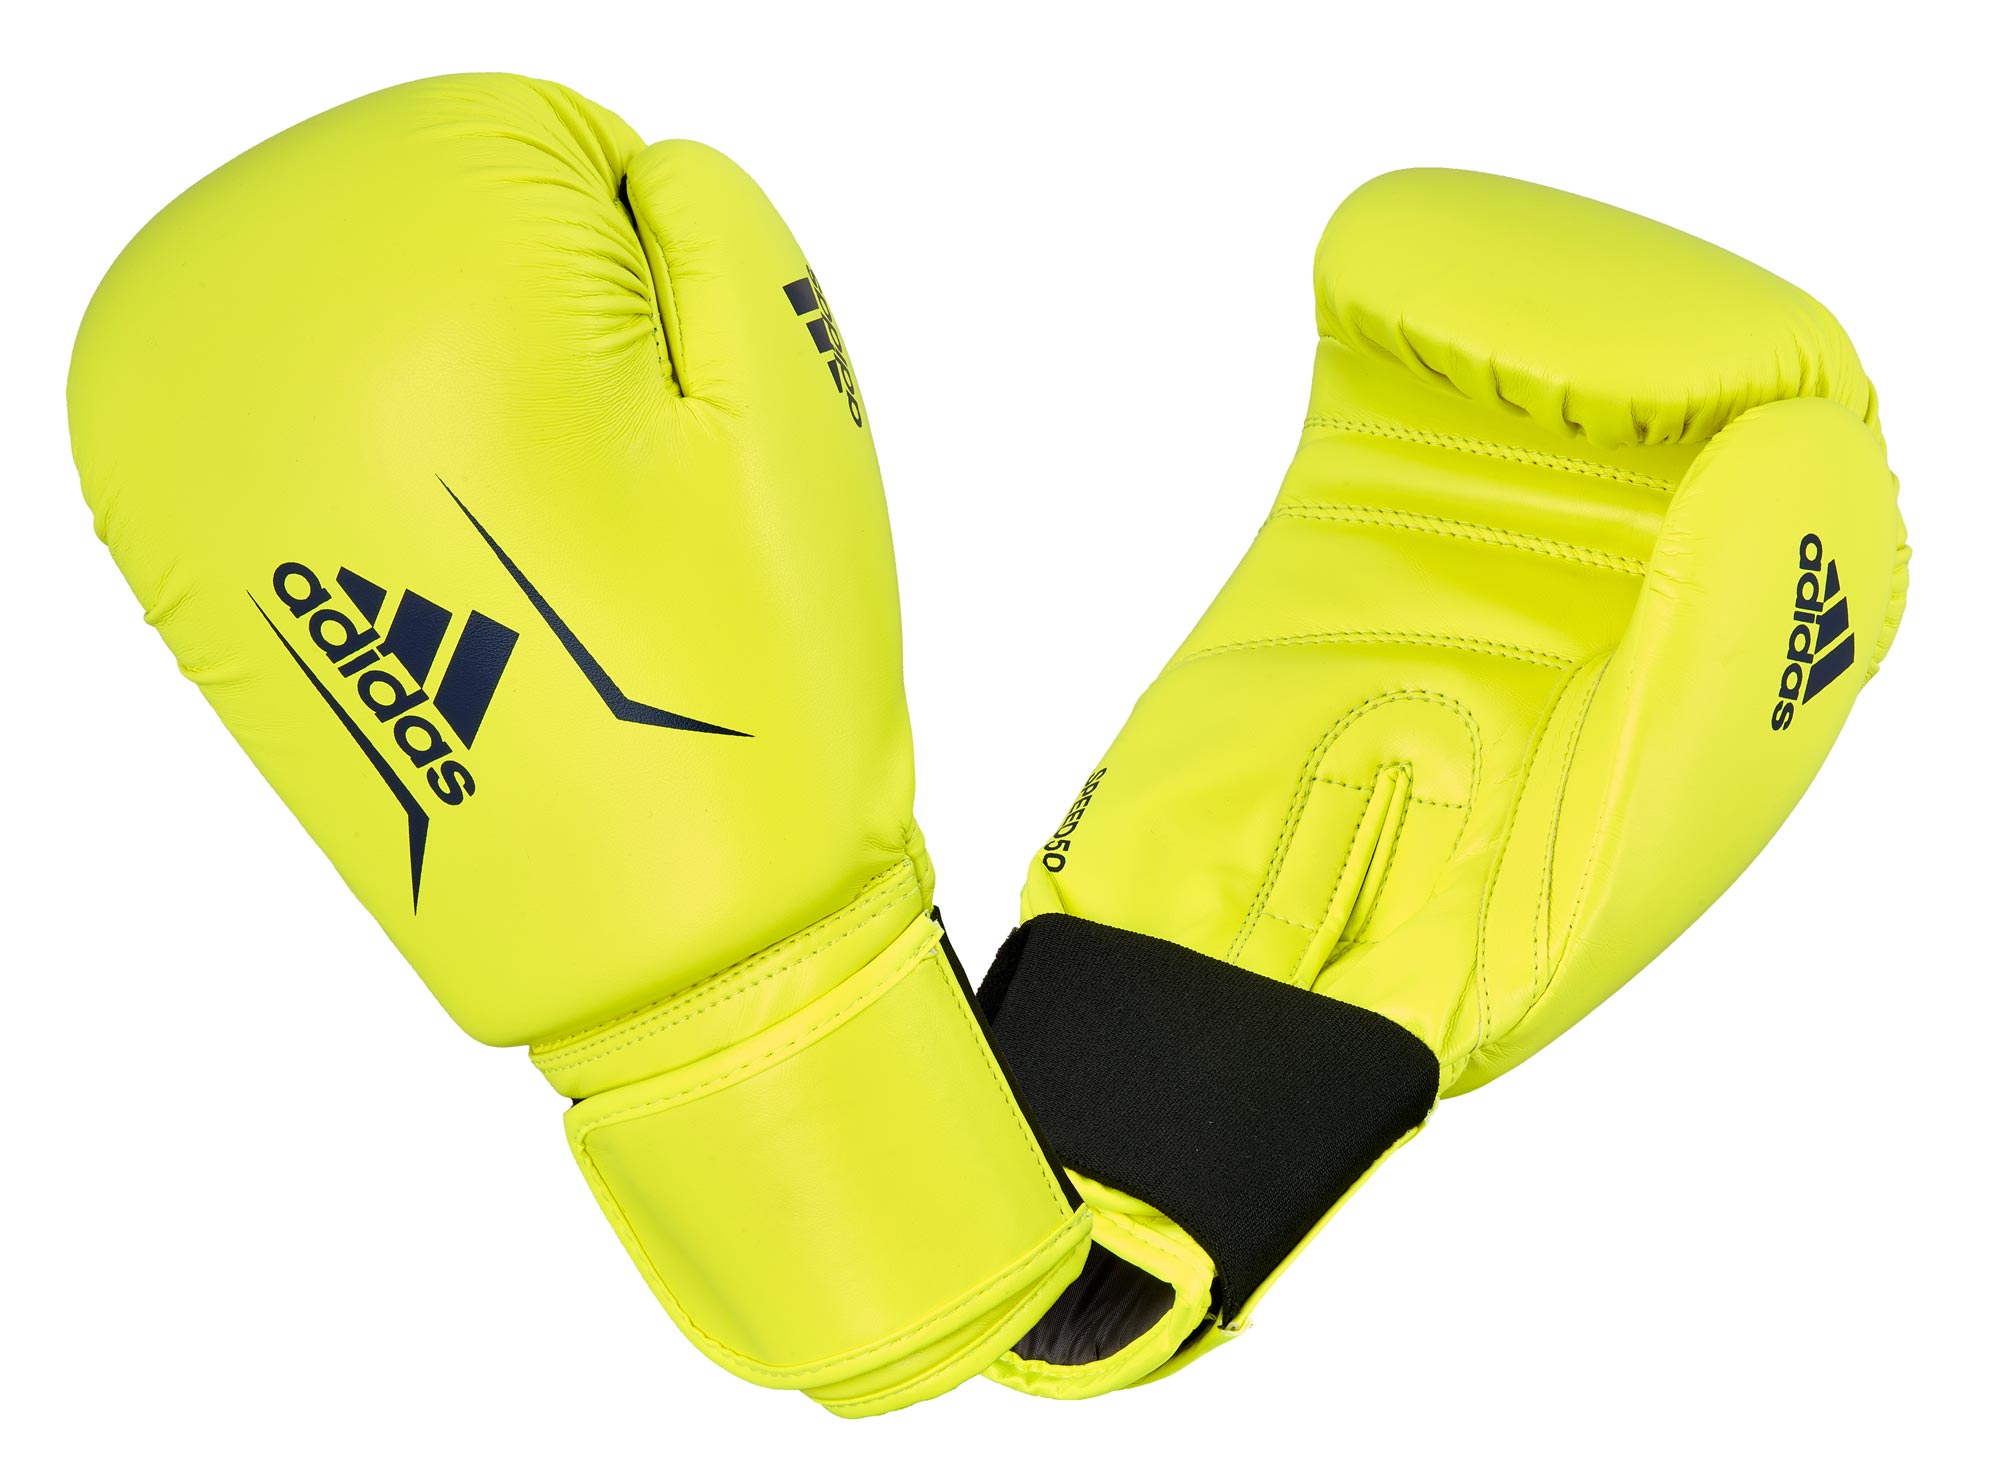 adidas boxing glove Speed 50 ADISBG50, yellow/navy